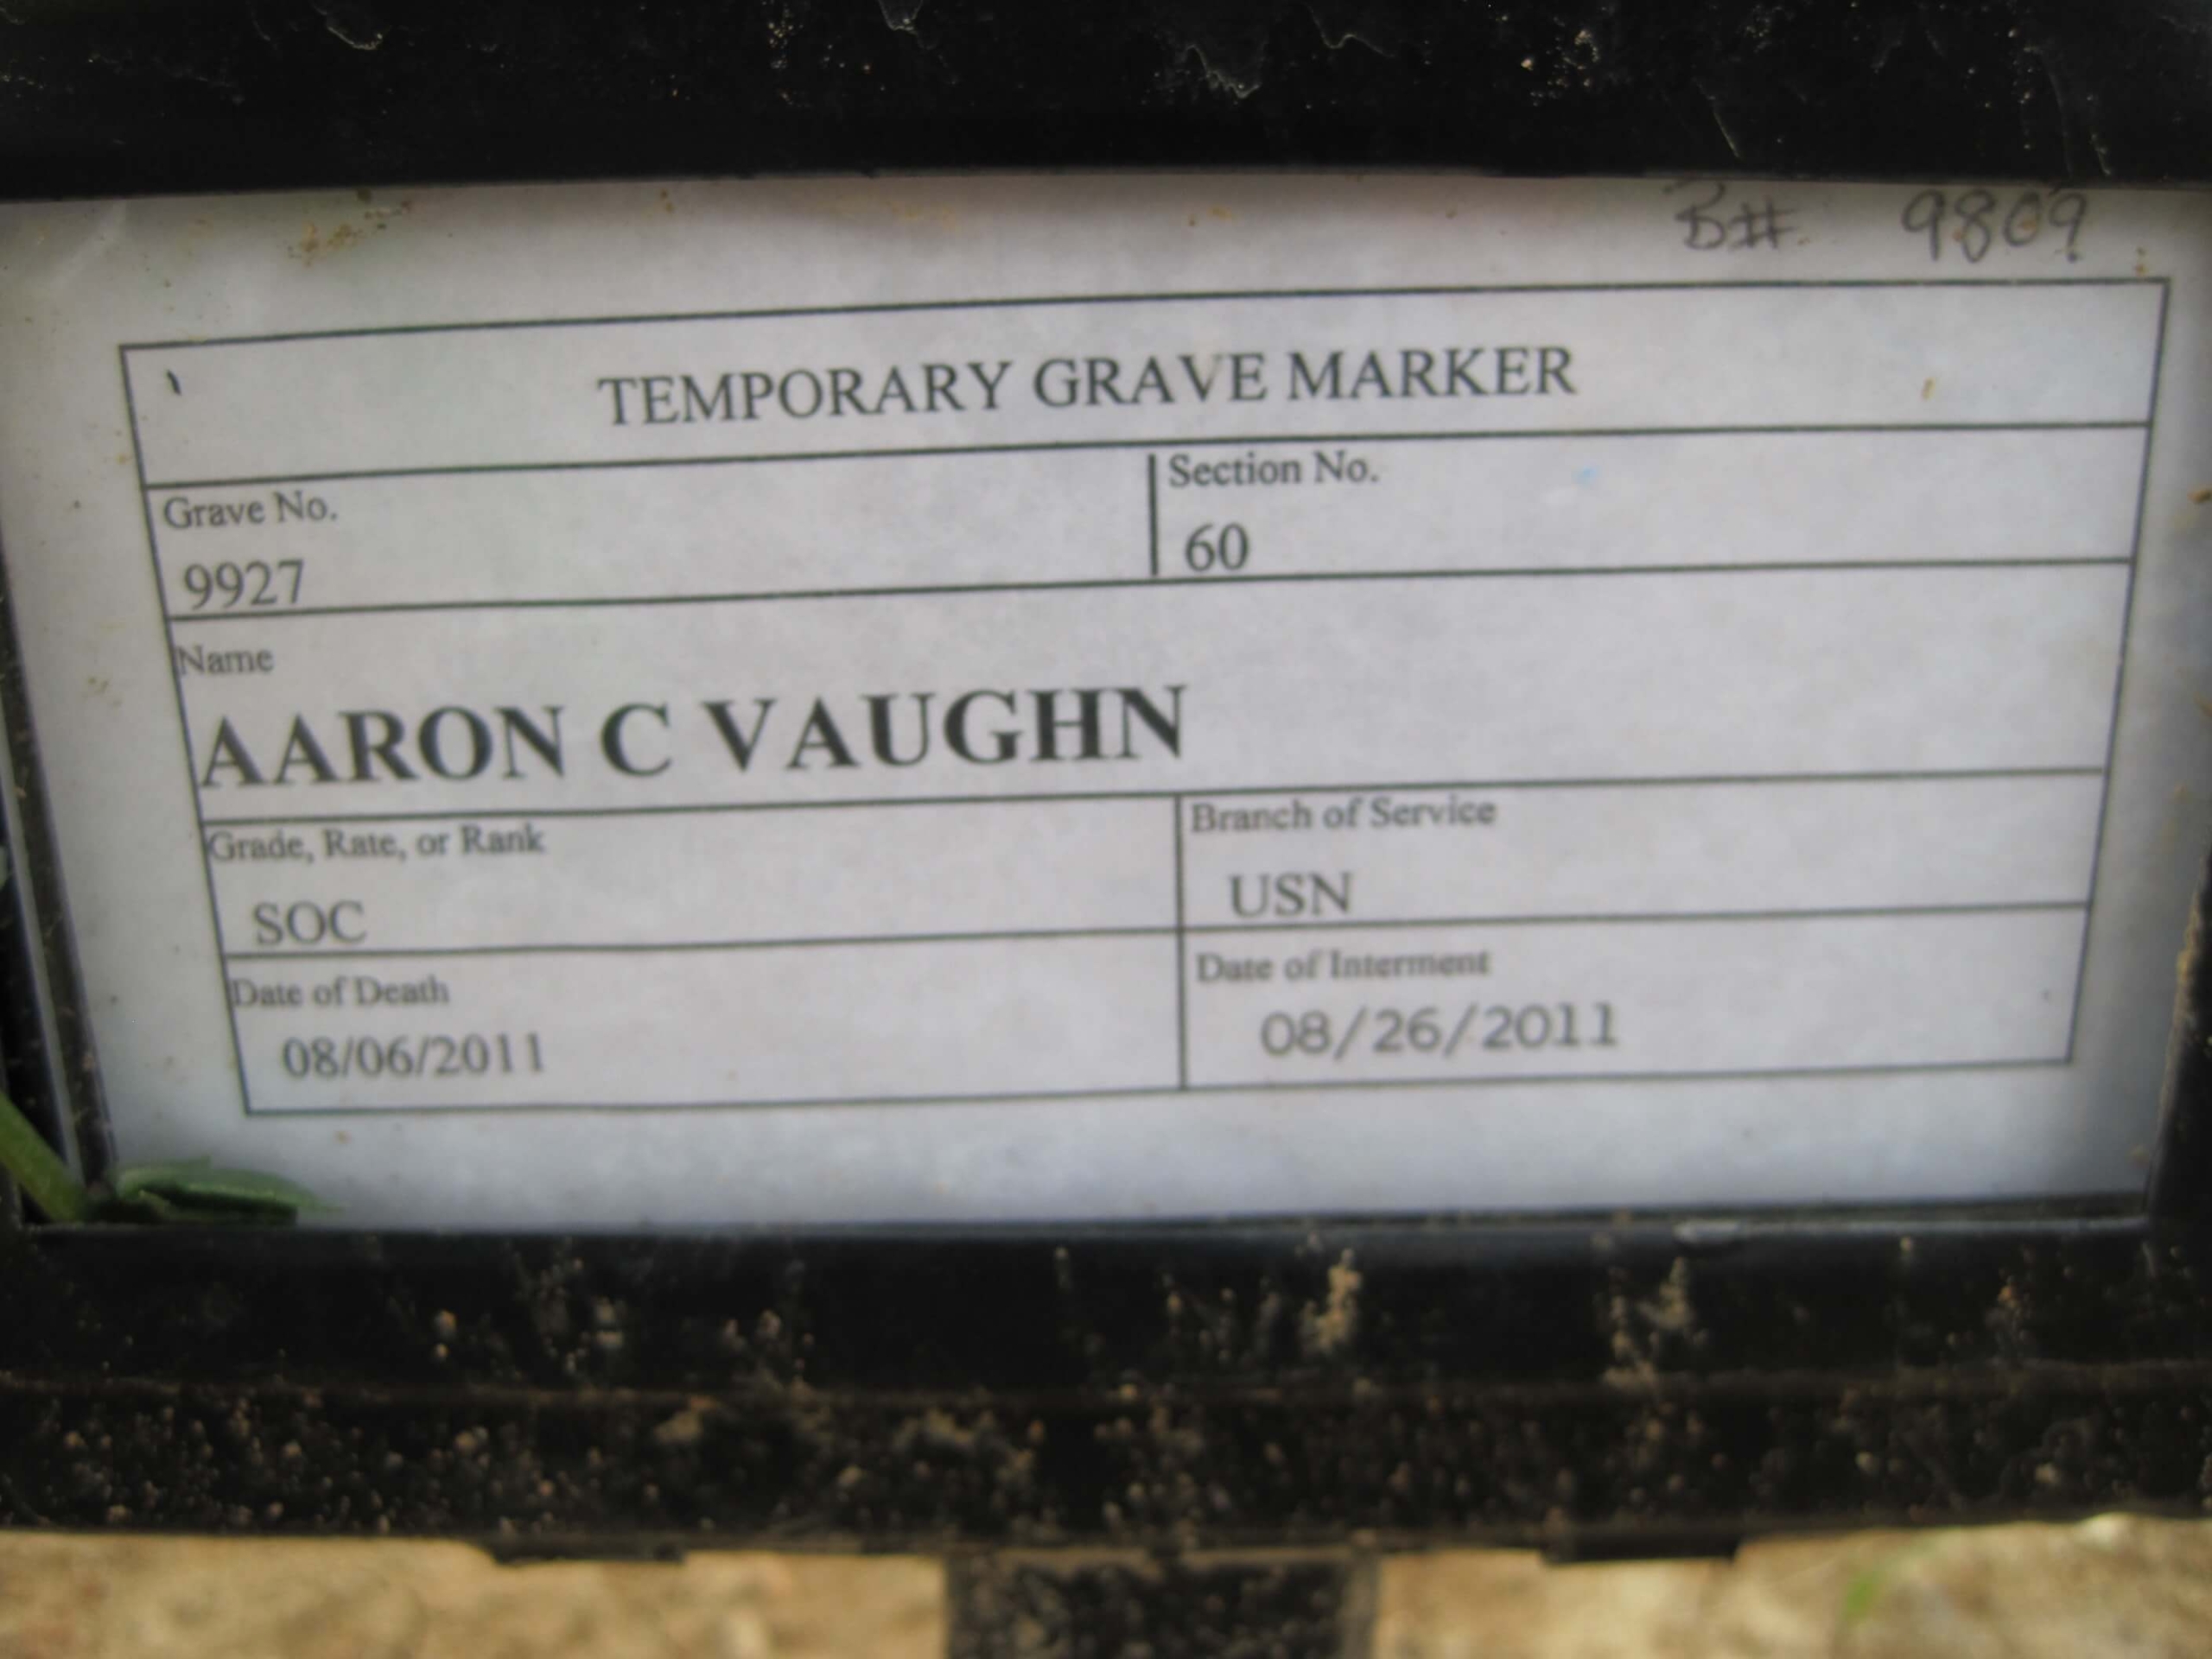 acvaughn-gravesite-photo-by-eileen-horan-september-2011-002